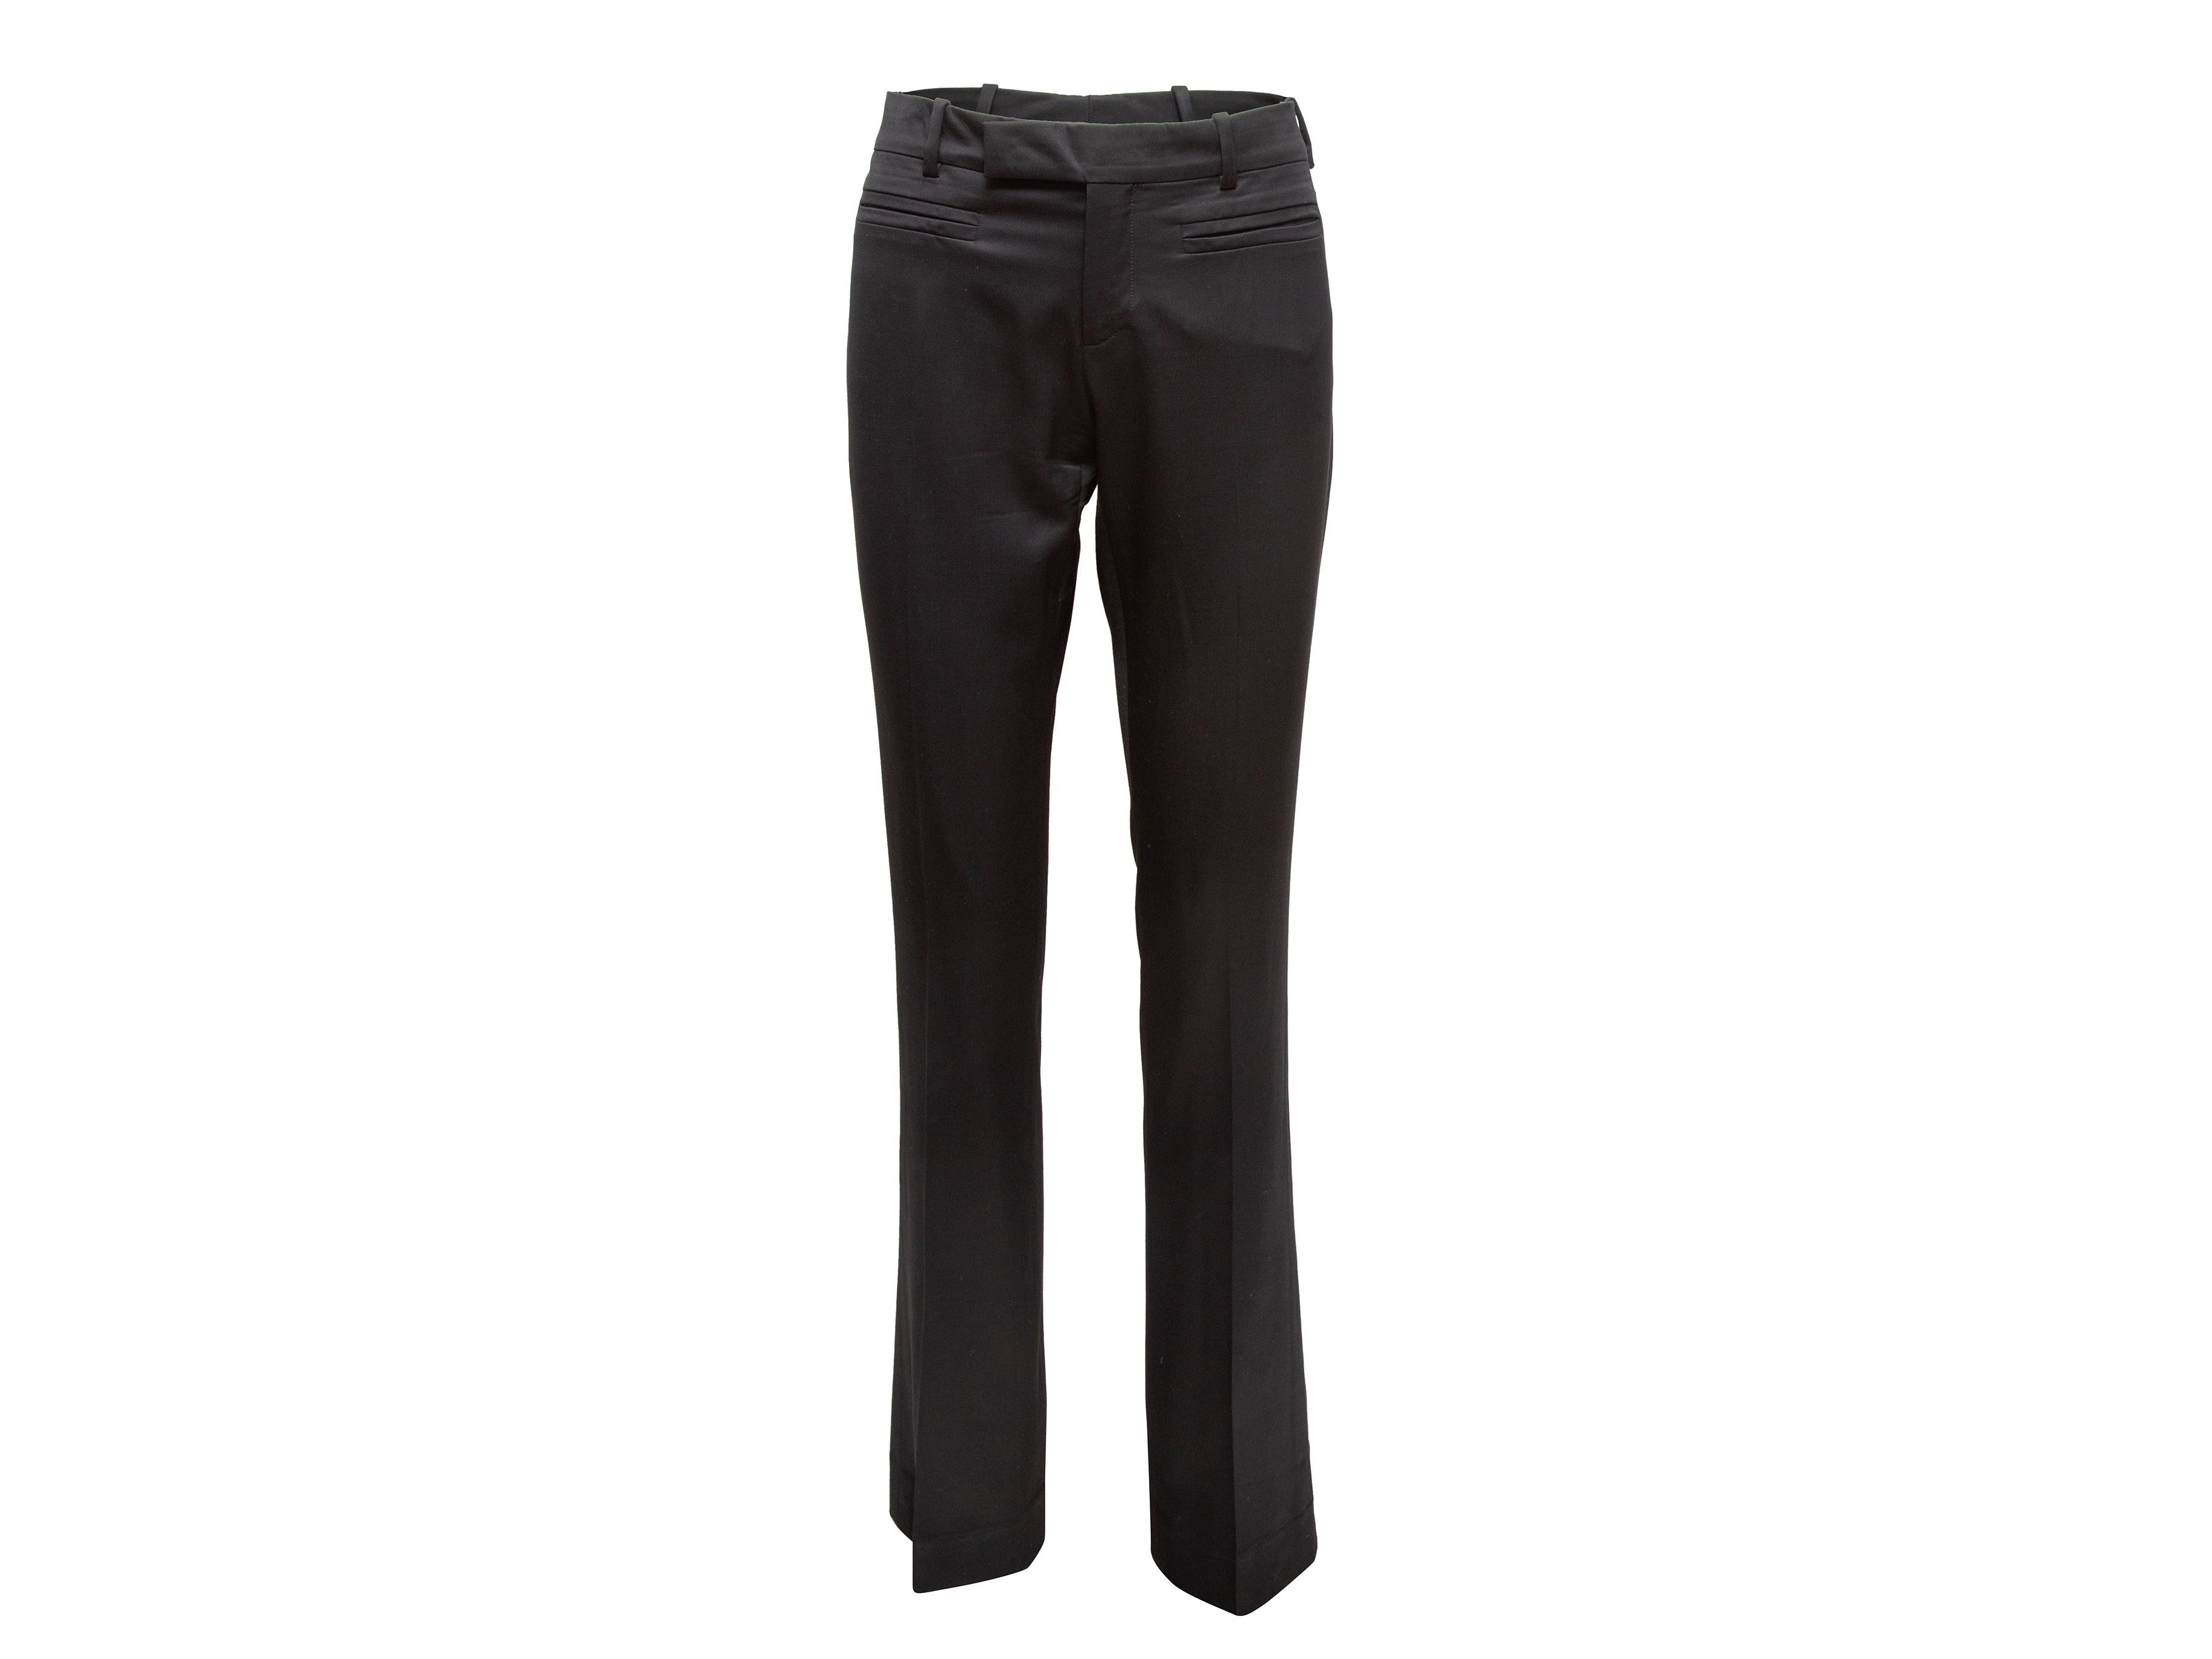 Buy Gucci Womens Pants10 BlackSize 40 at Amazonin